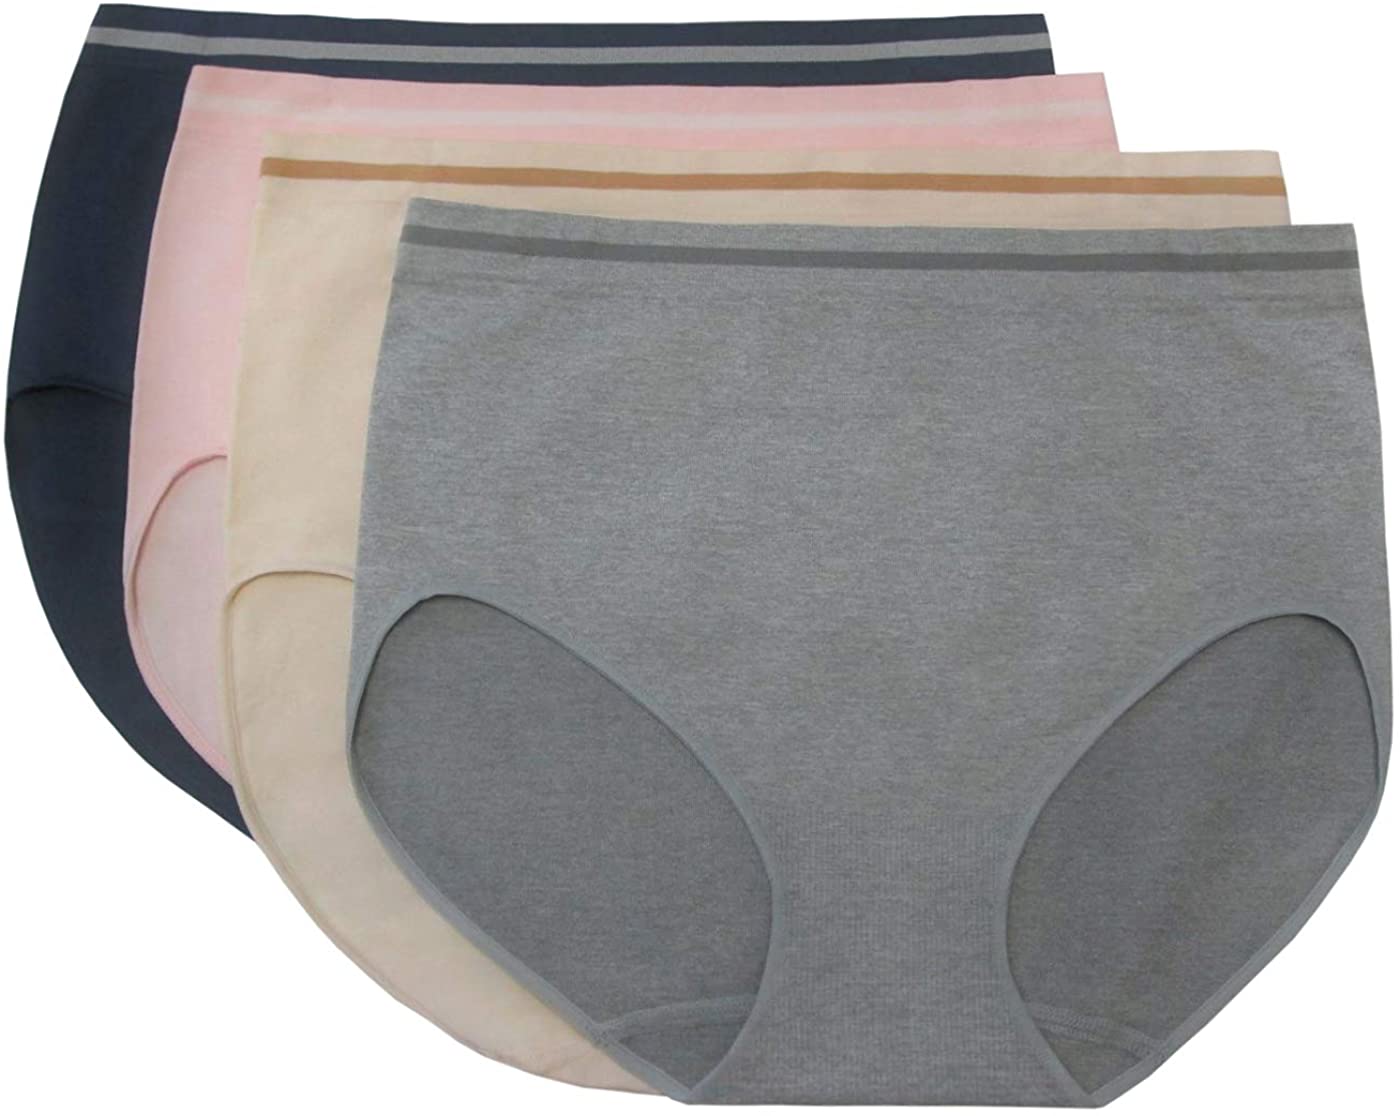 ELLEN TRACY Women’s Full Brief Panties Breathable Seamless Underwear 4-Pack  Mult